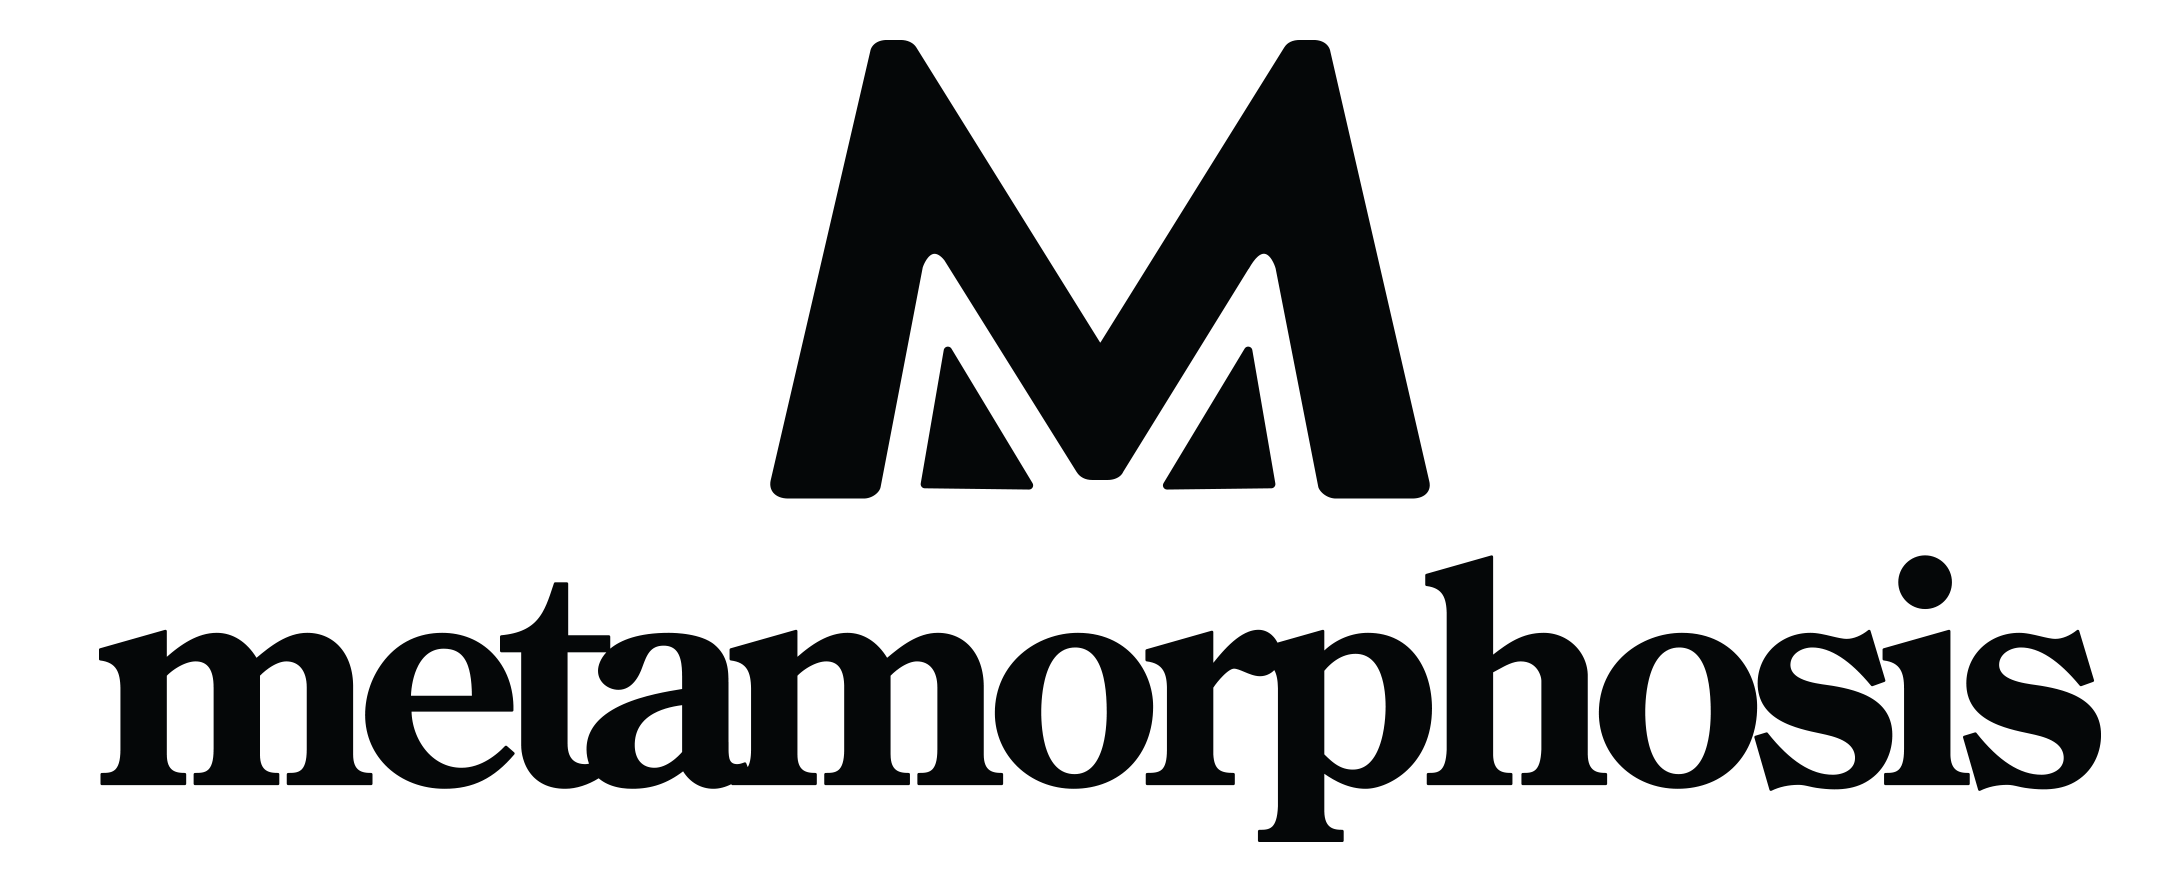 Metamorphosis Acquires National Pet Services Platform Barkly